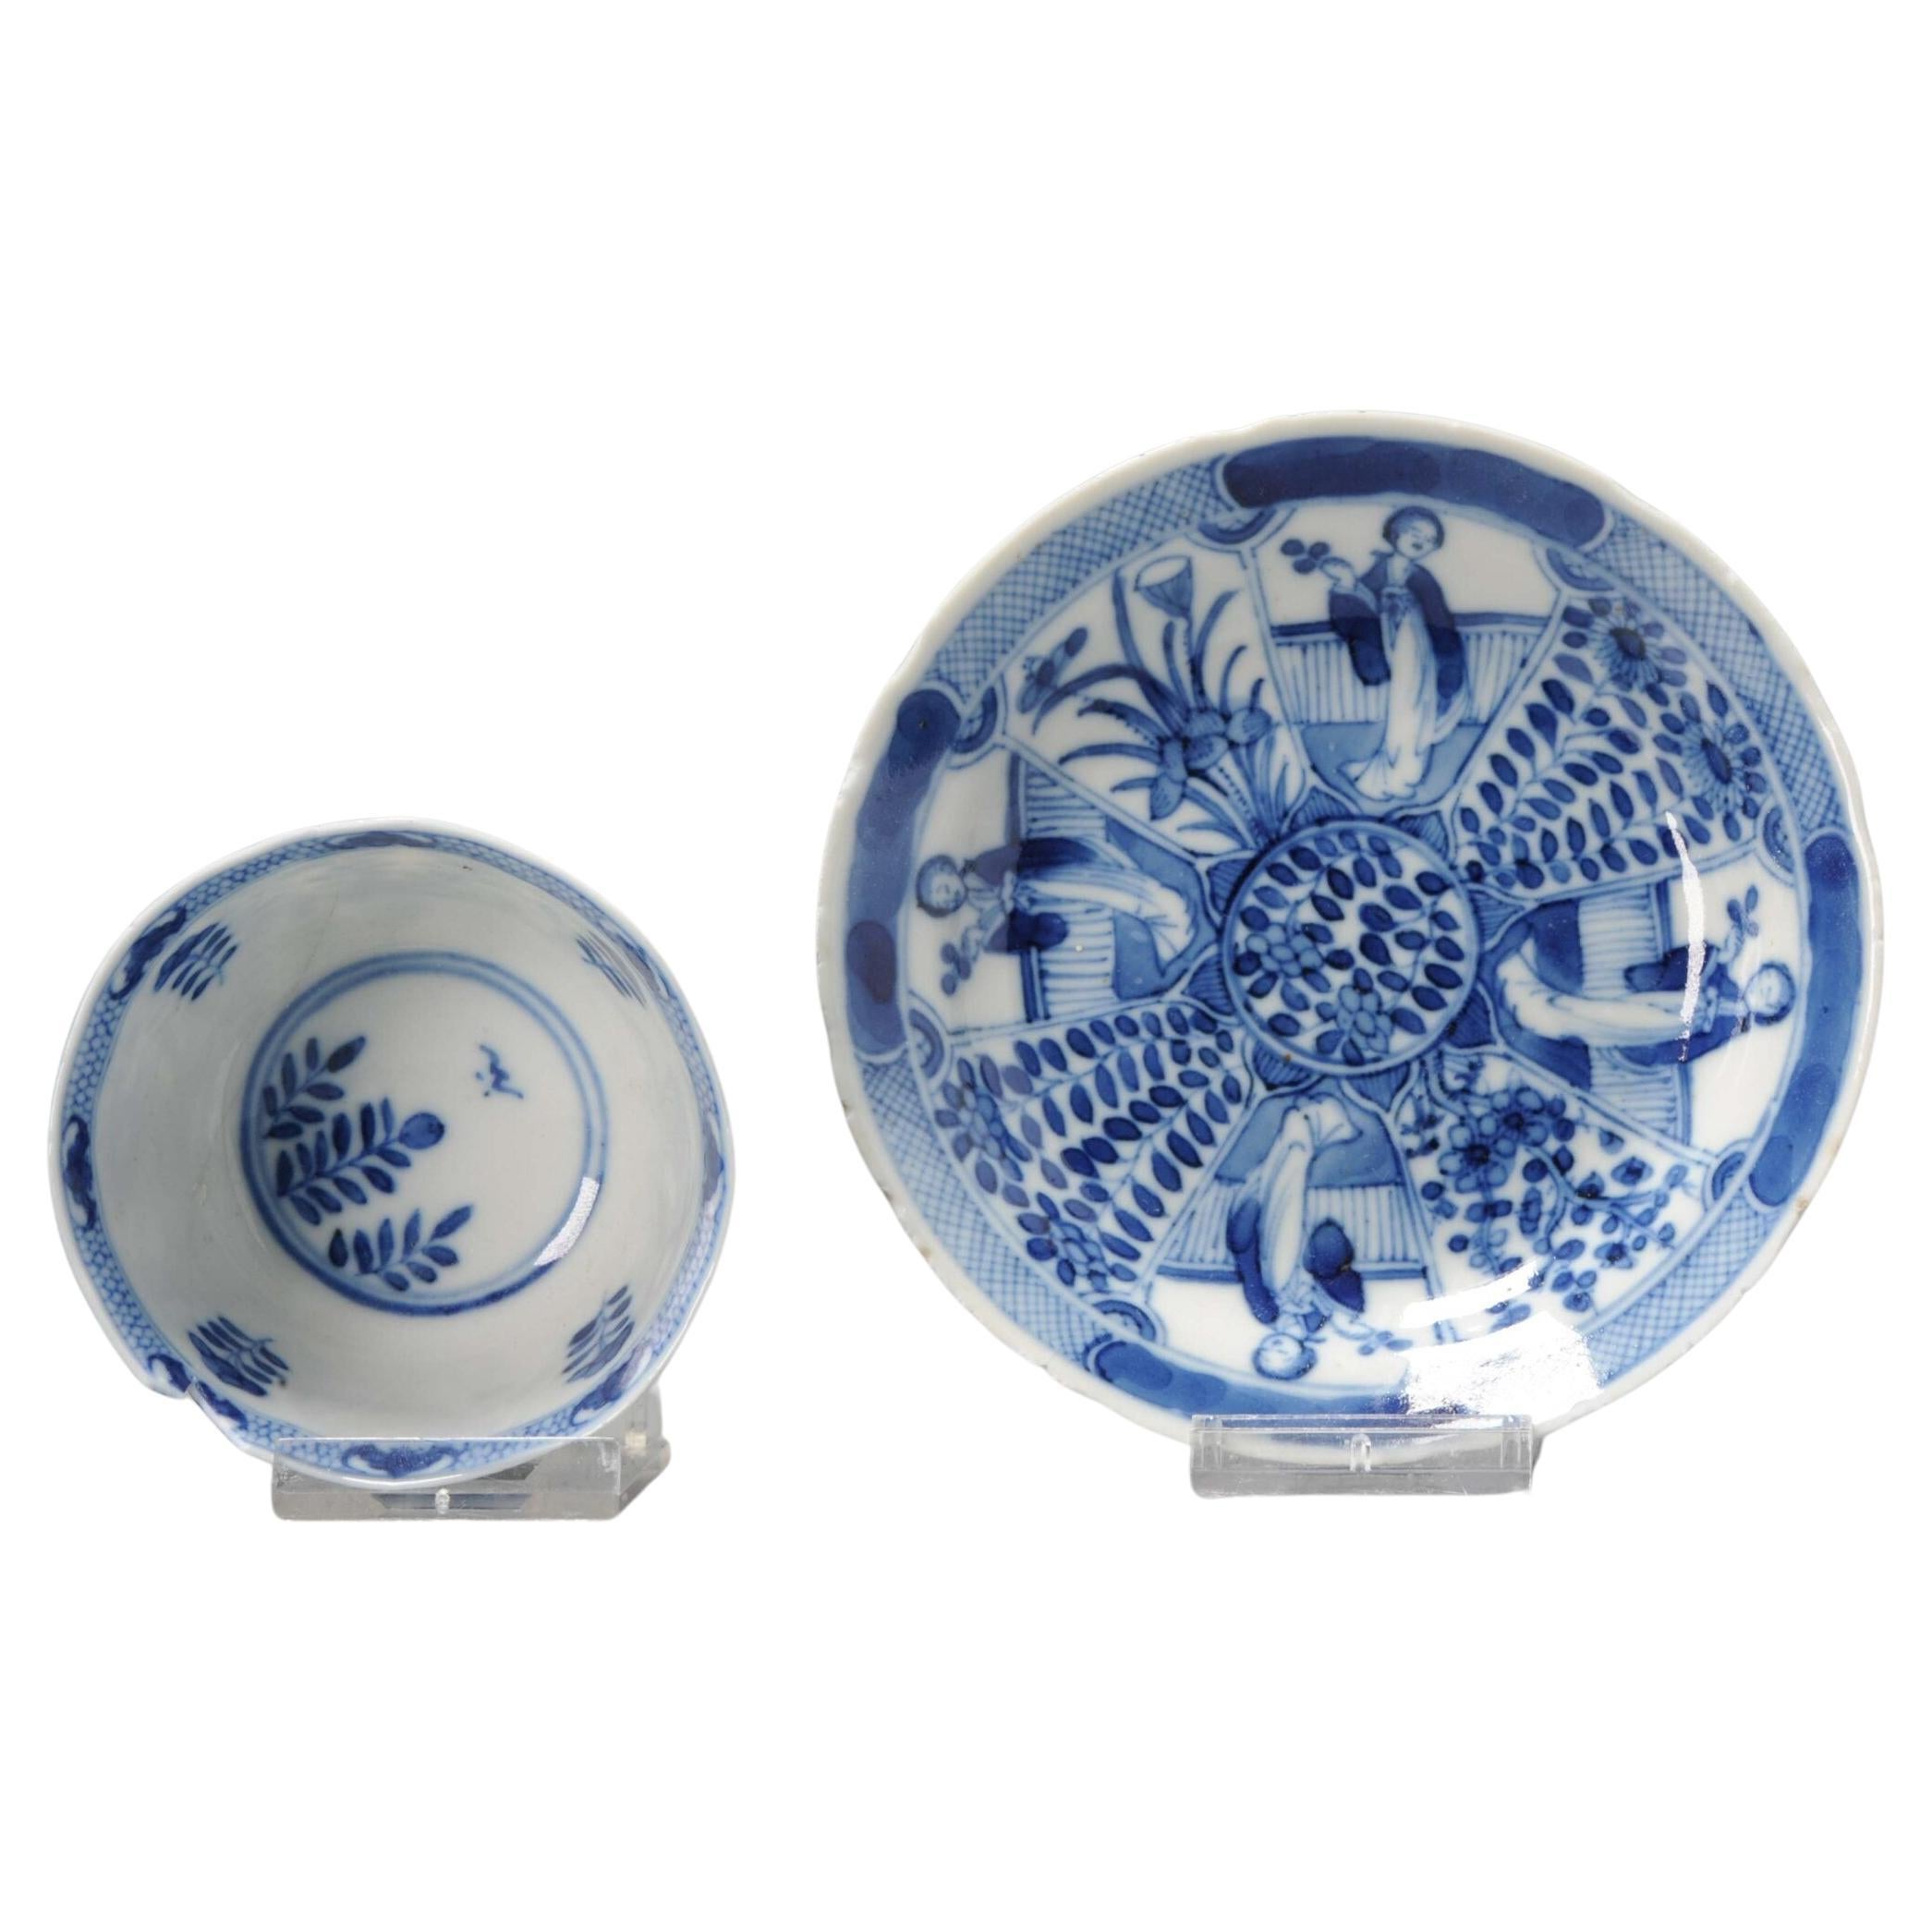 Chinesische Kangxi-Revival-Teeschale und Schale aus Porzellan mit Parsley Kangxi-Markierung, 19. Cen